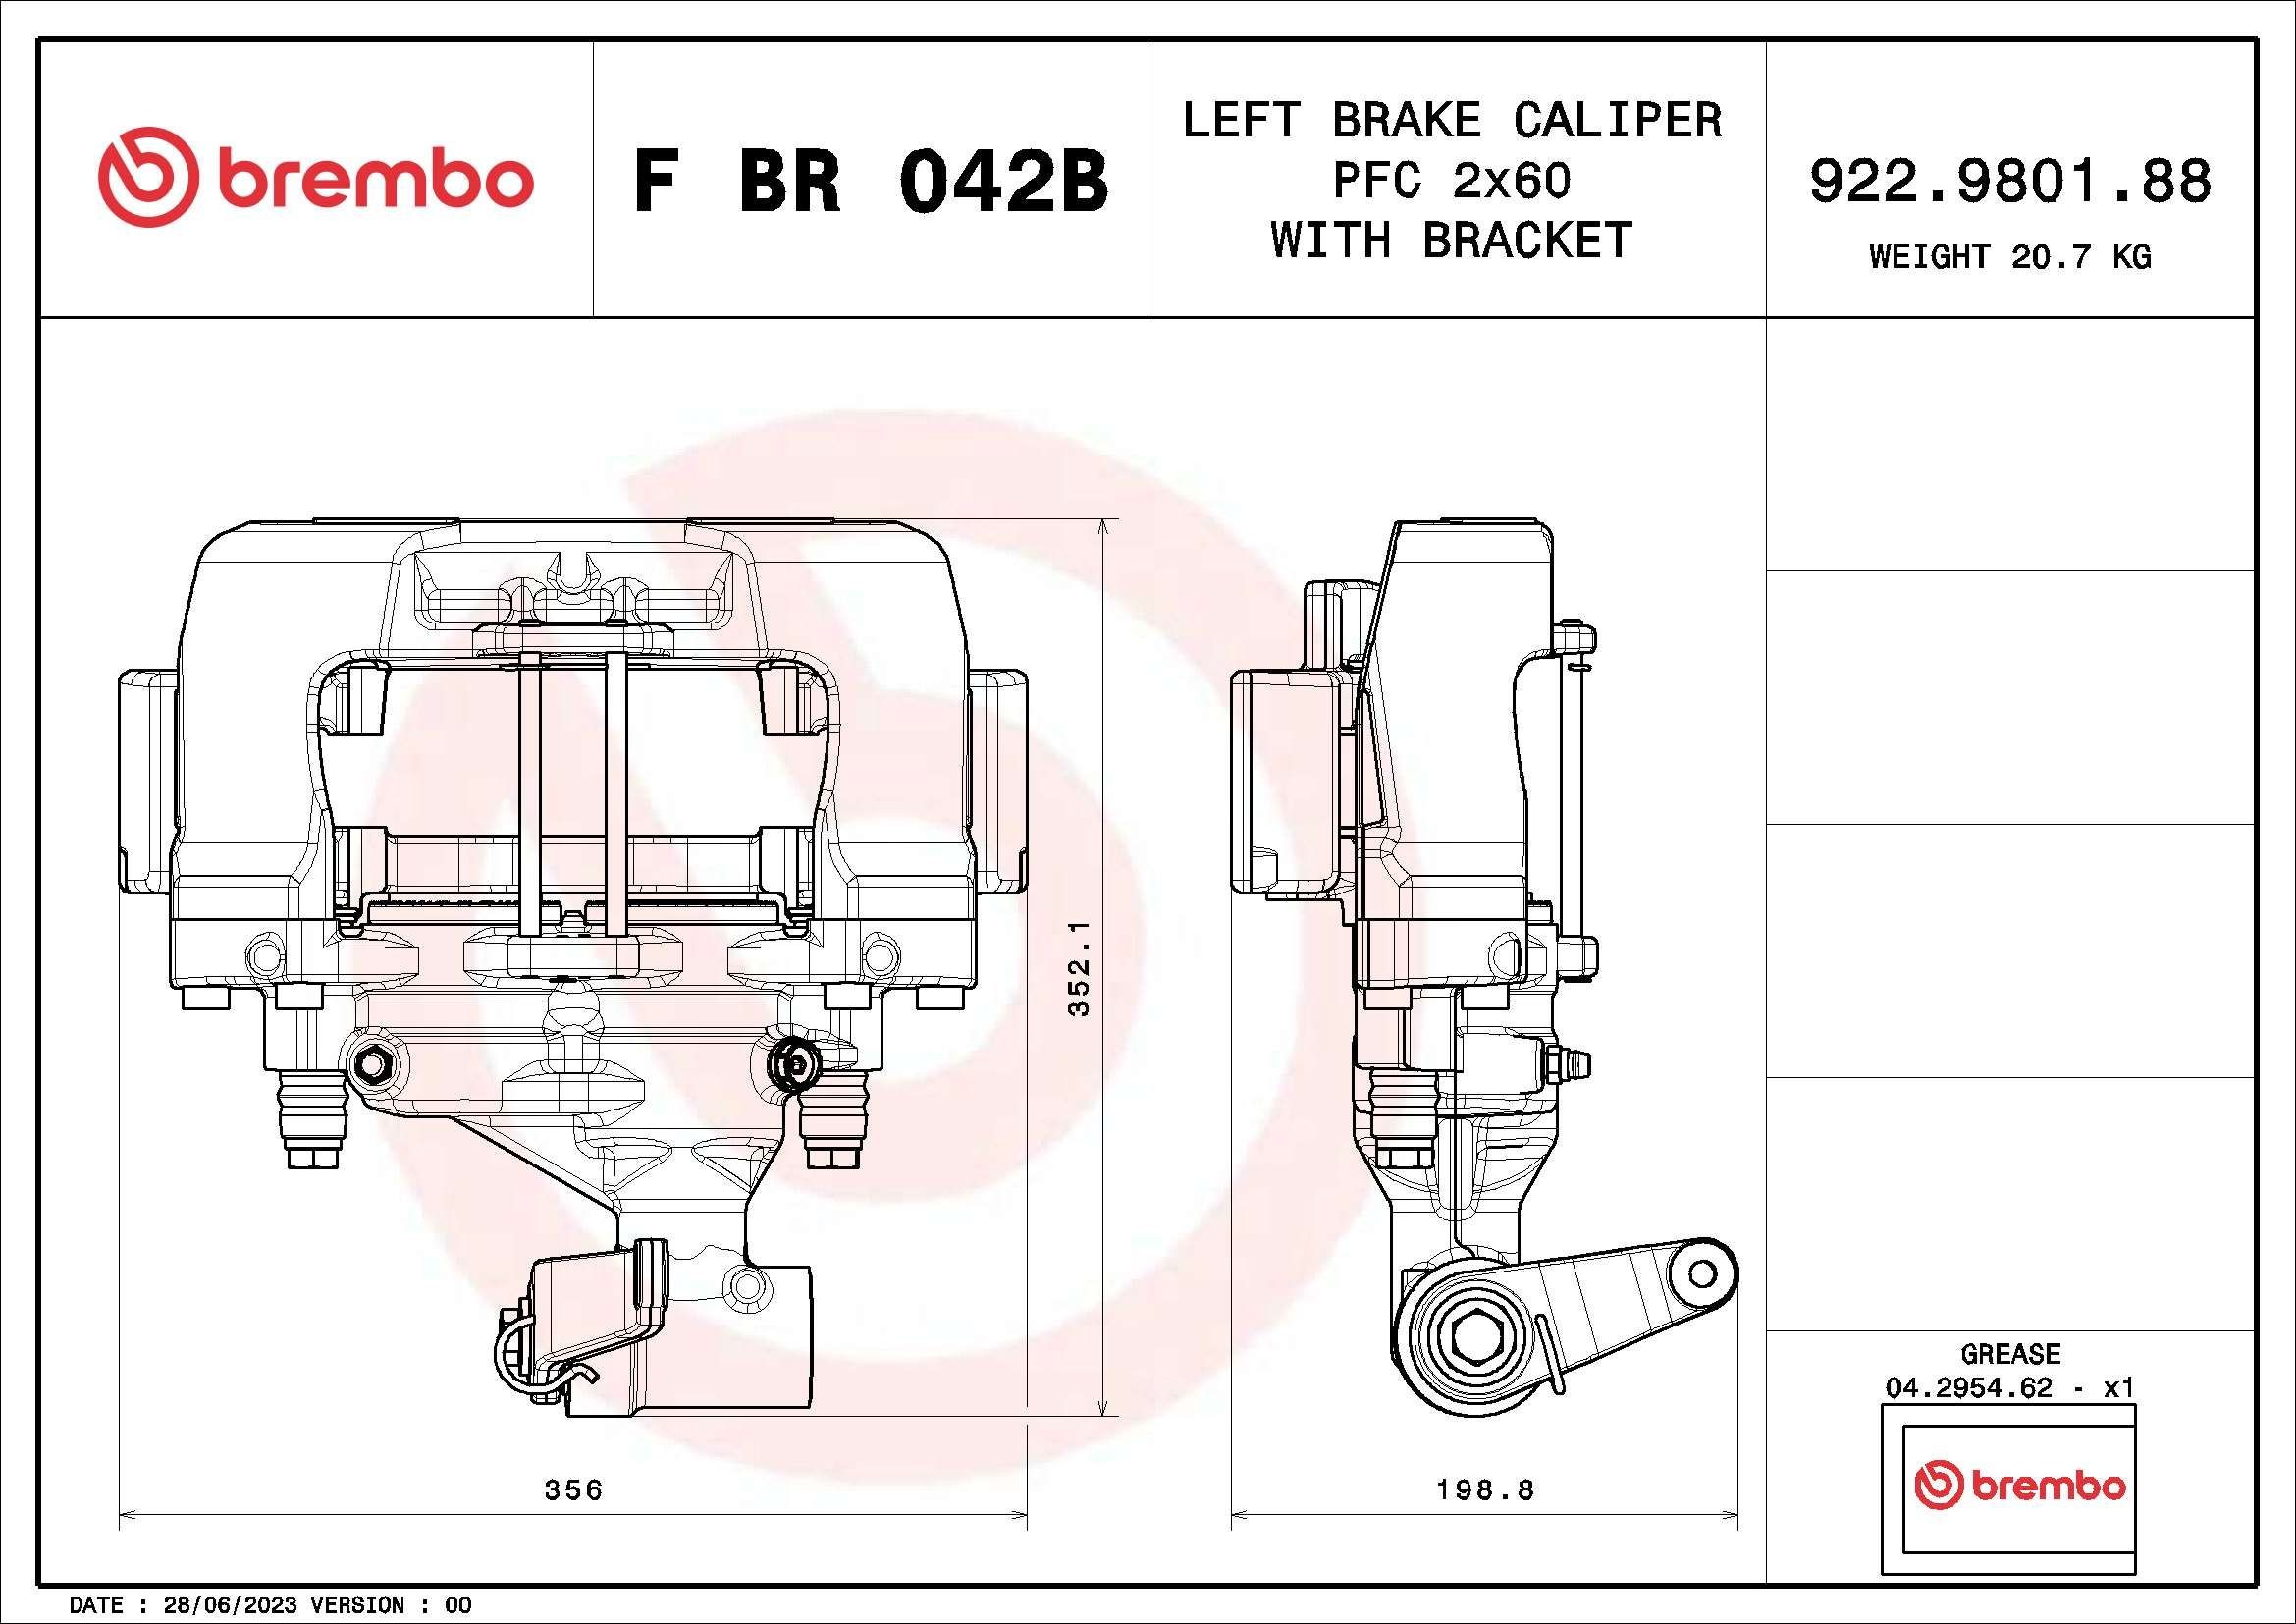 BREMBO Calipers F BR 042B